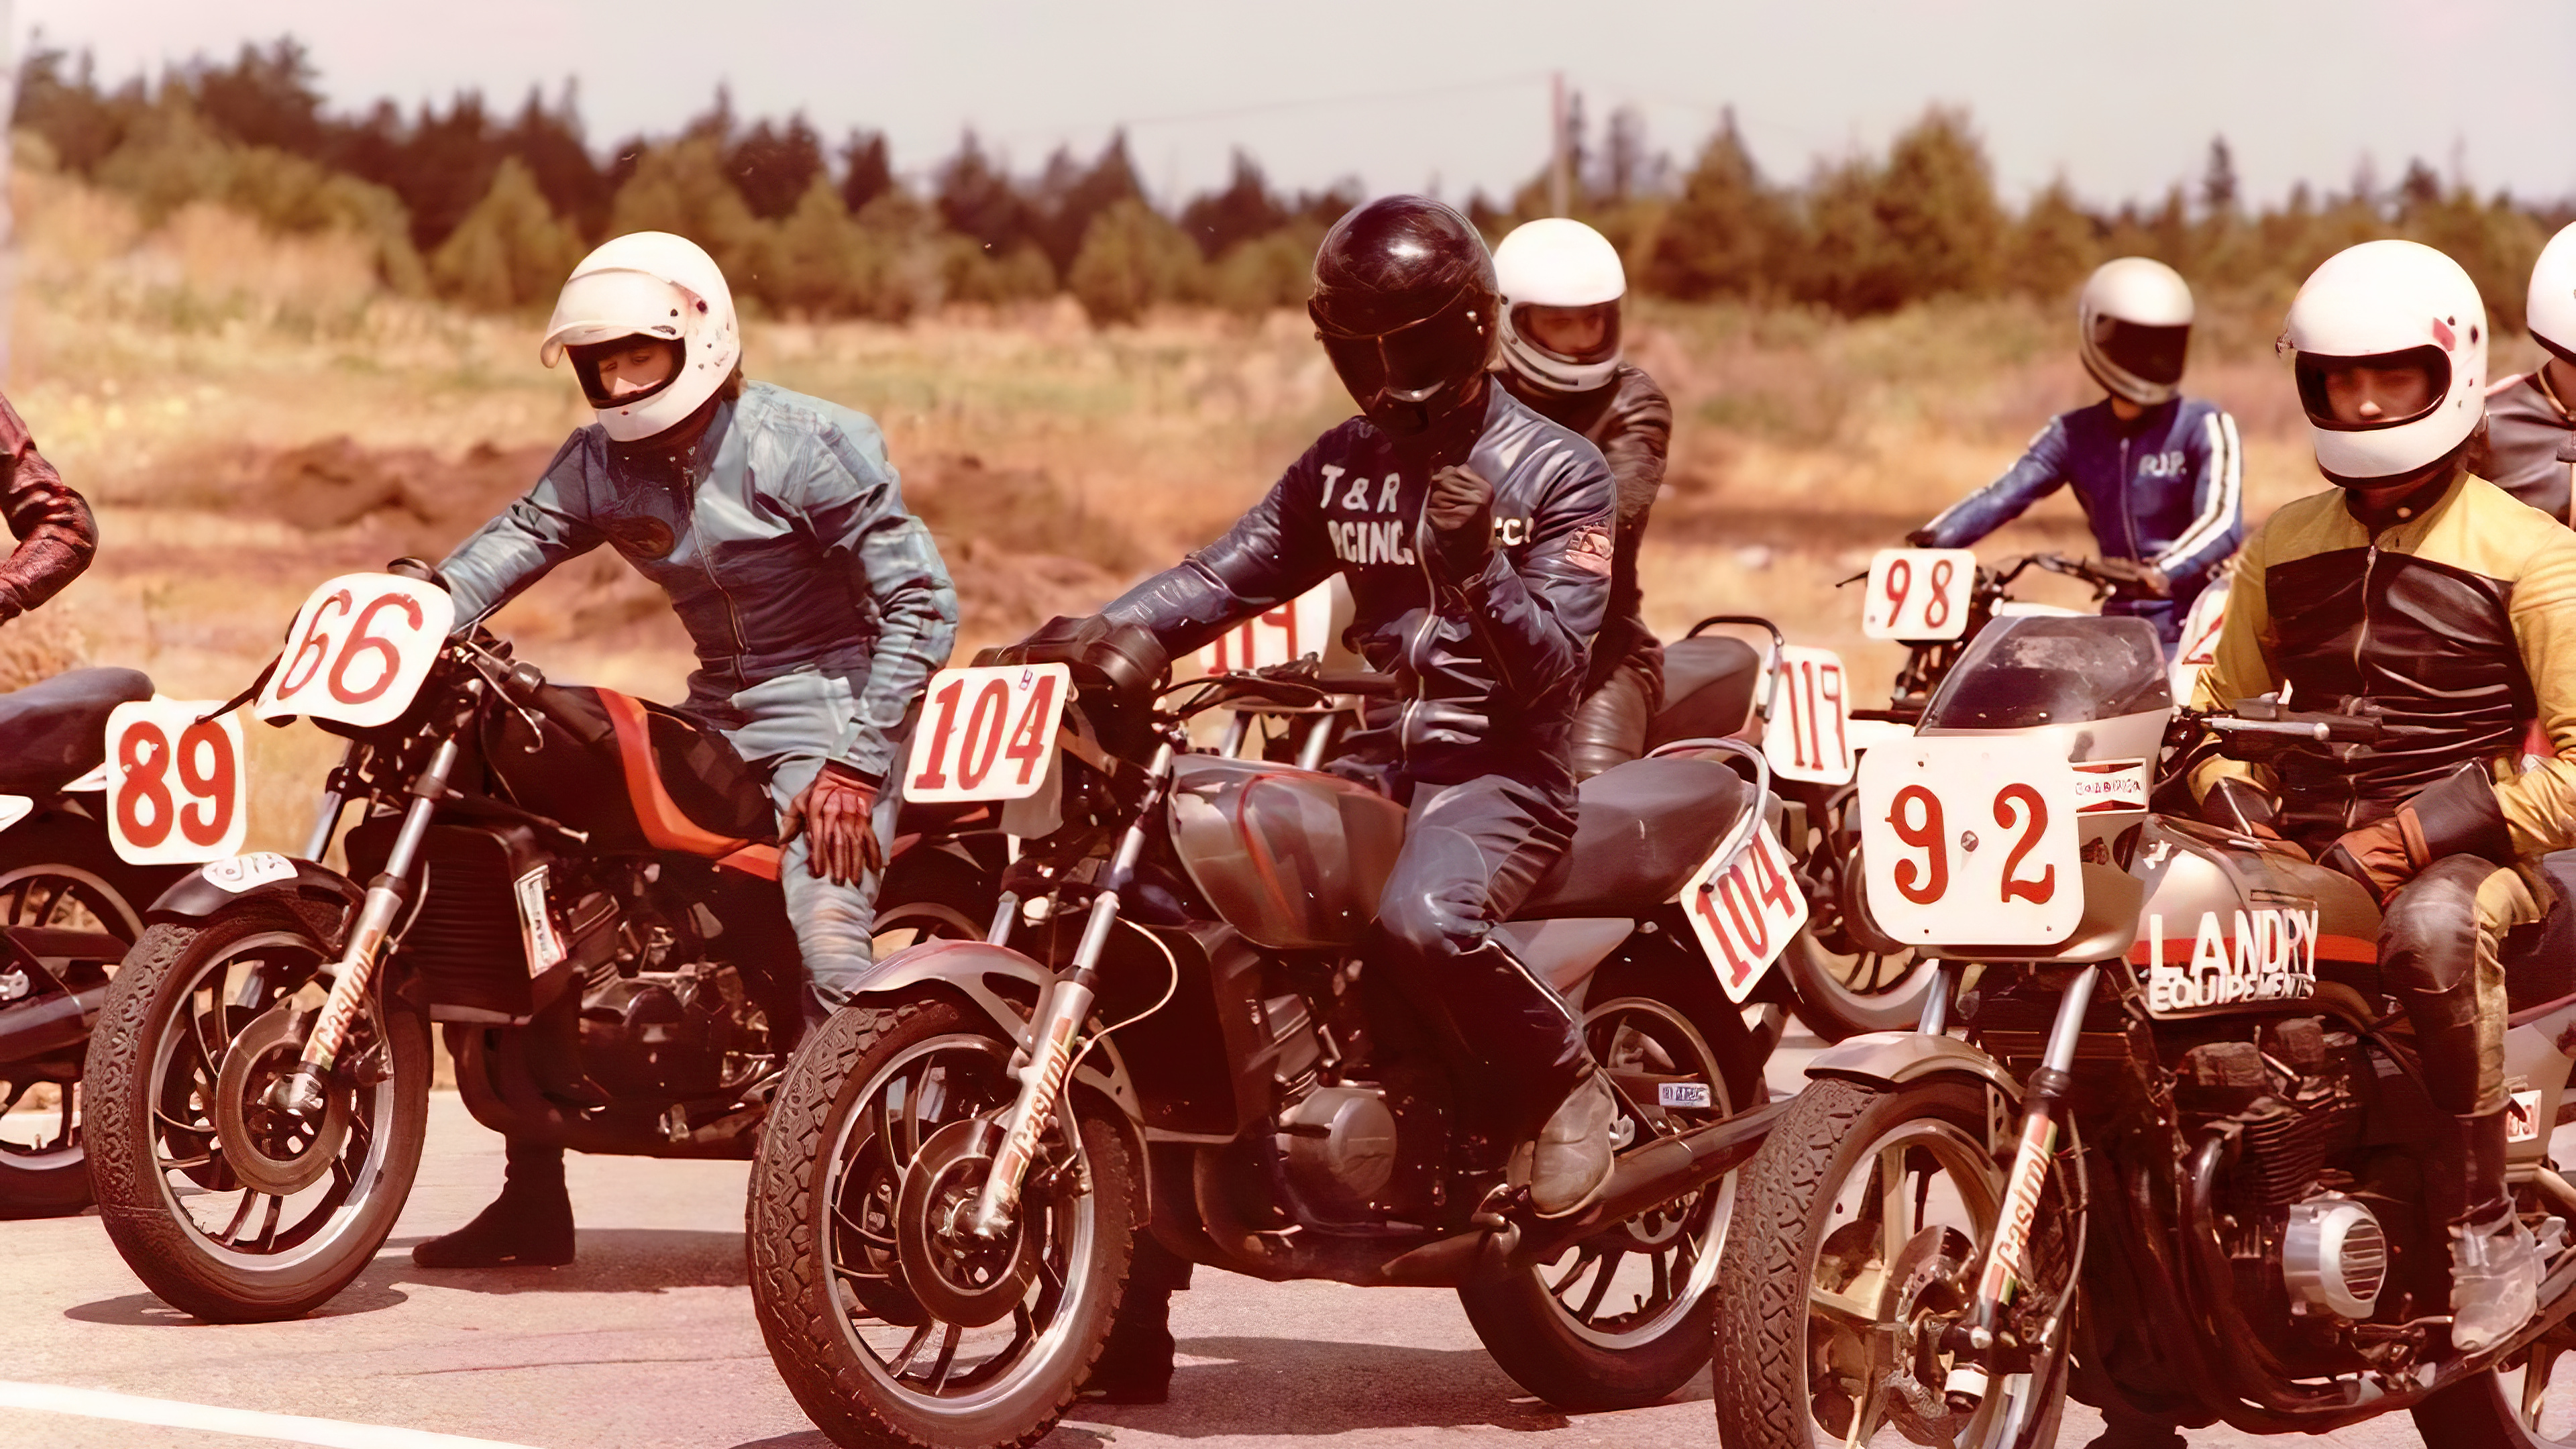 Motorcycle Racing: Amateur motorcyclists in the 80s, Kawasaki, People's Sport. 3840x2160 4K Wallpaper.